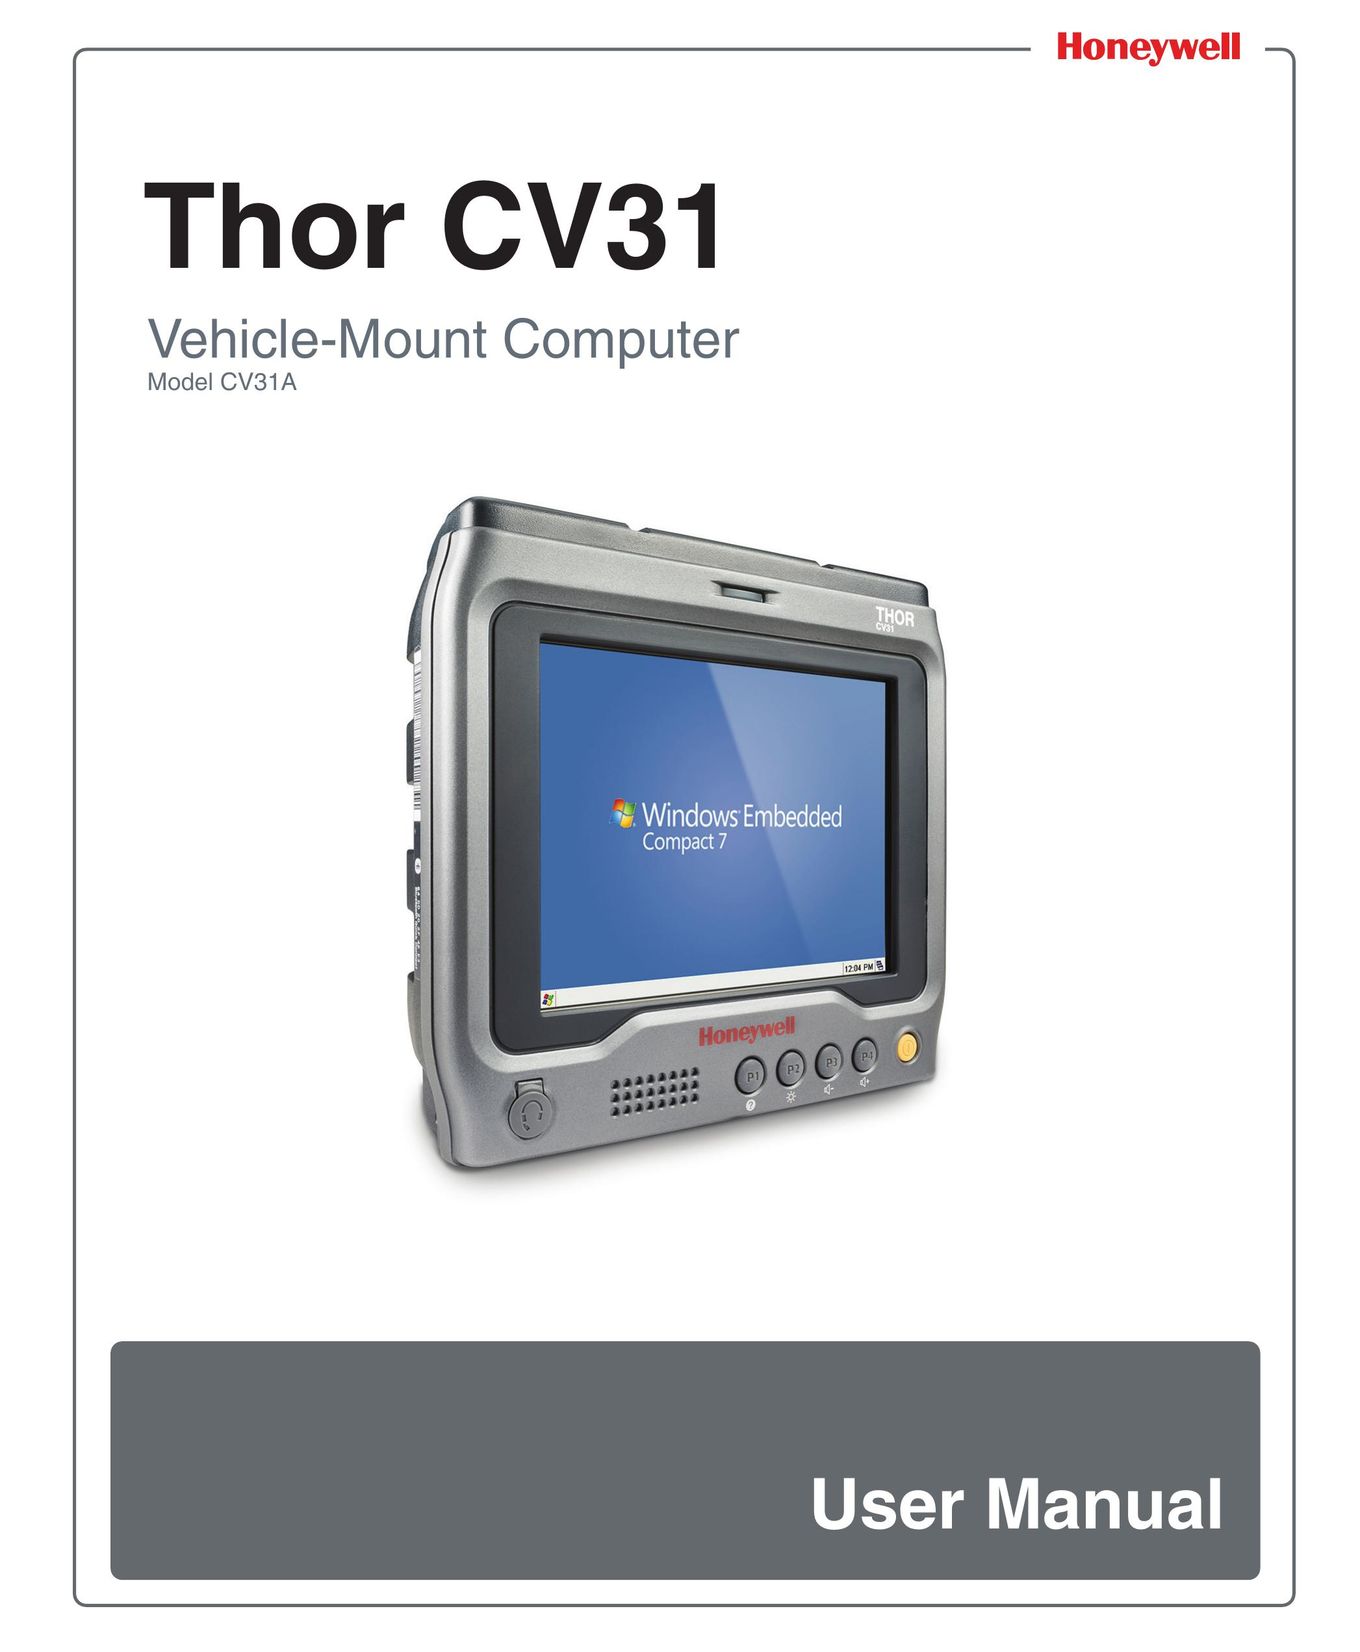 Honeywell CV31 Personal Computer User Manual